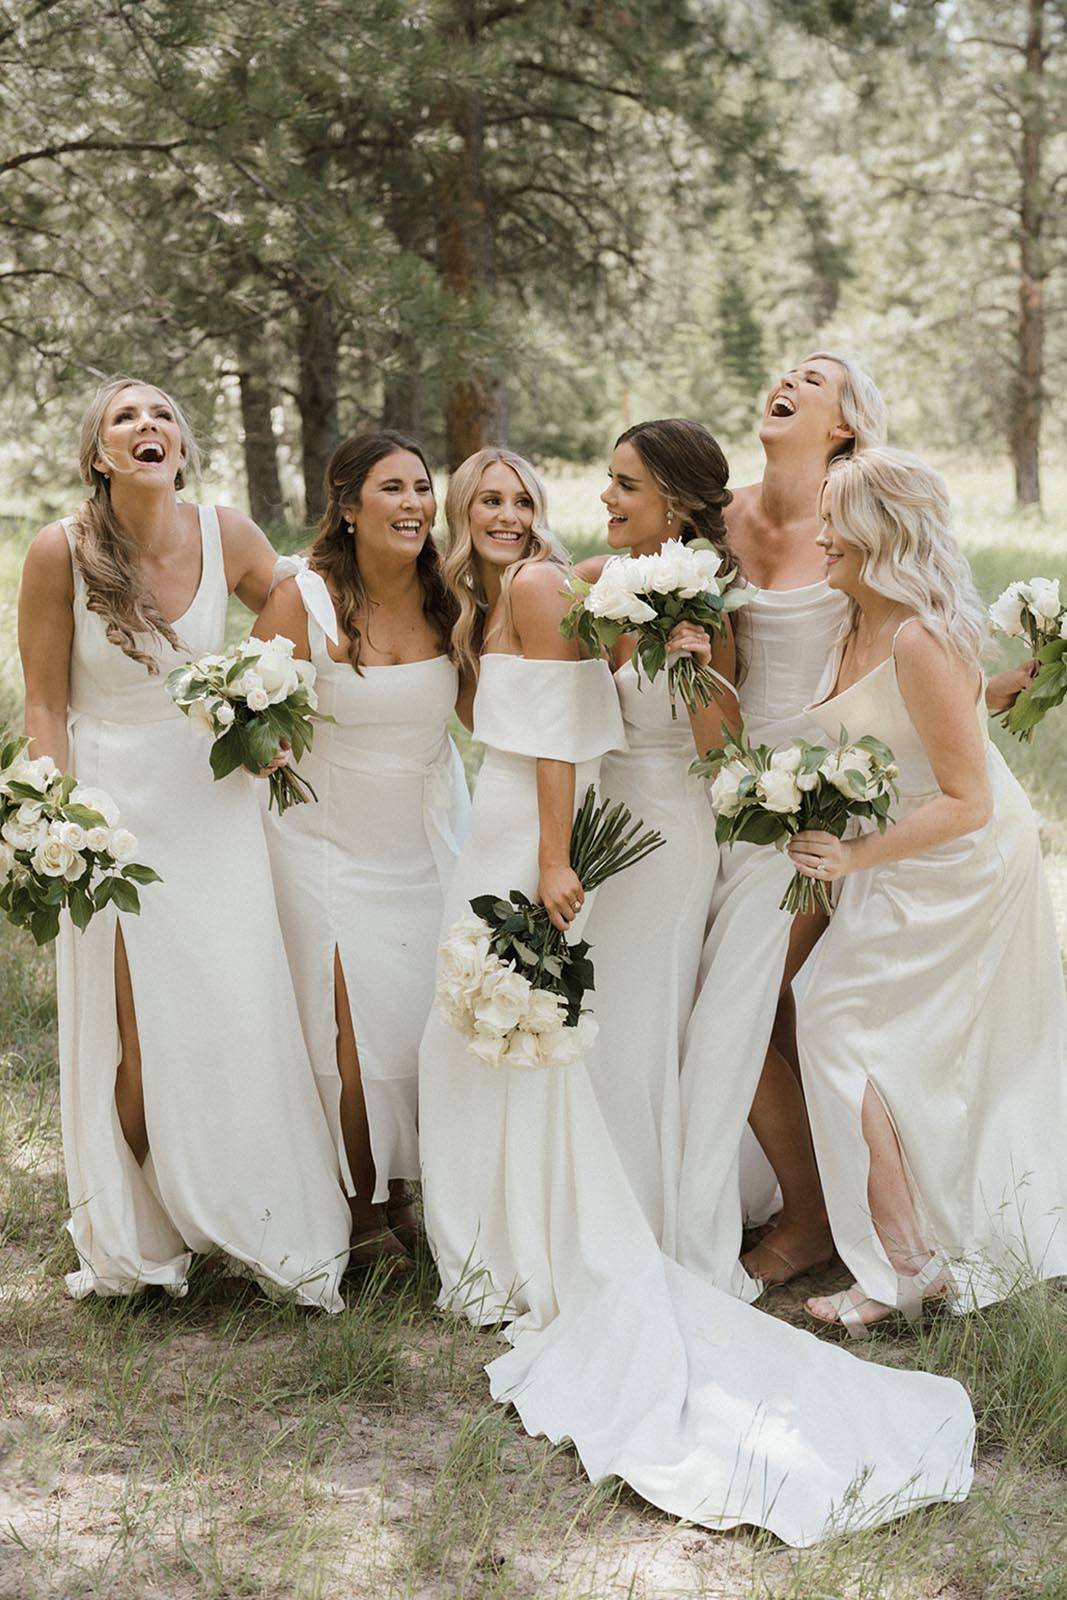 Bride, having fun with her bridesmaids